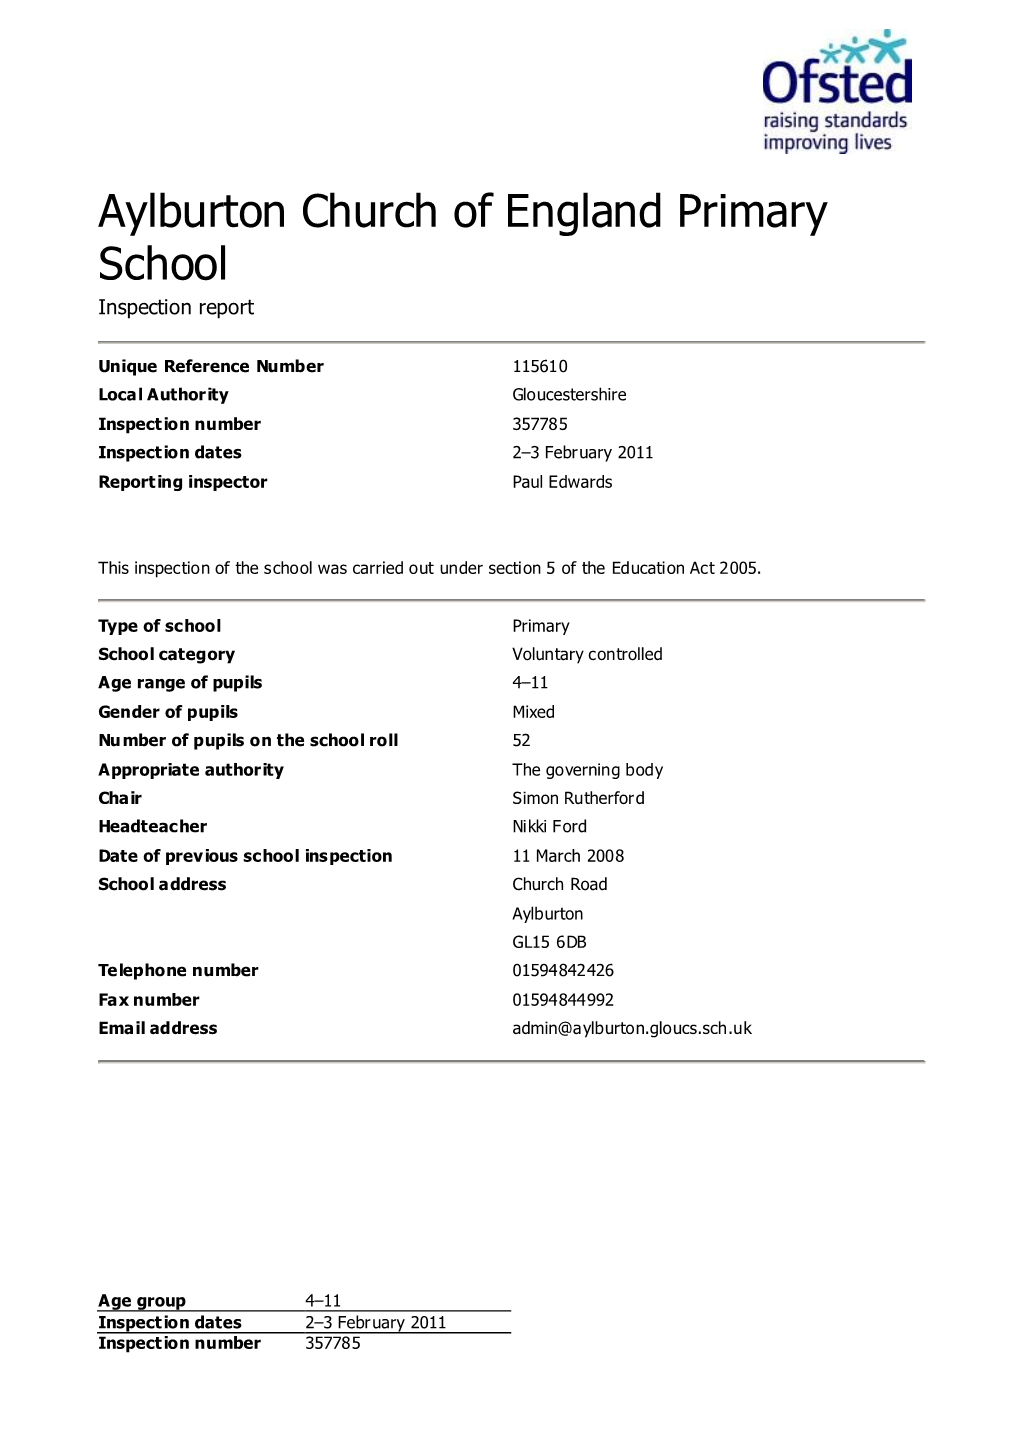 Aylburton Church of England Primary School Inspection Report